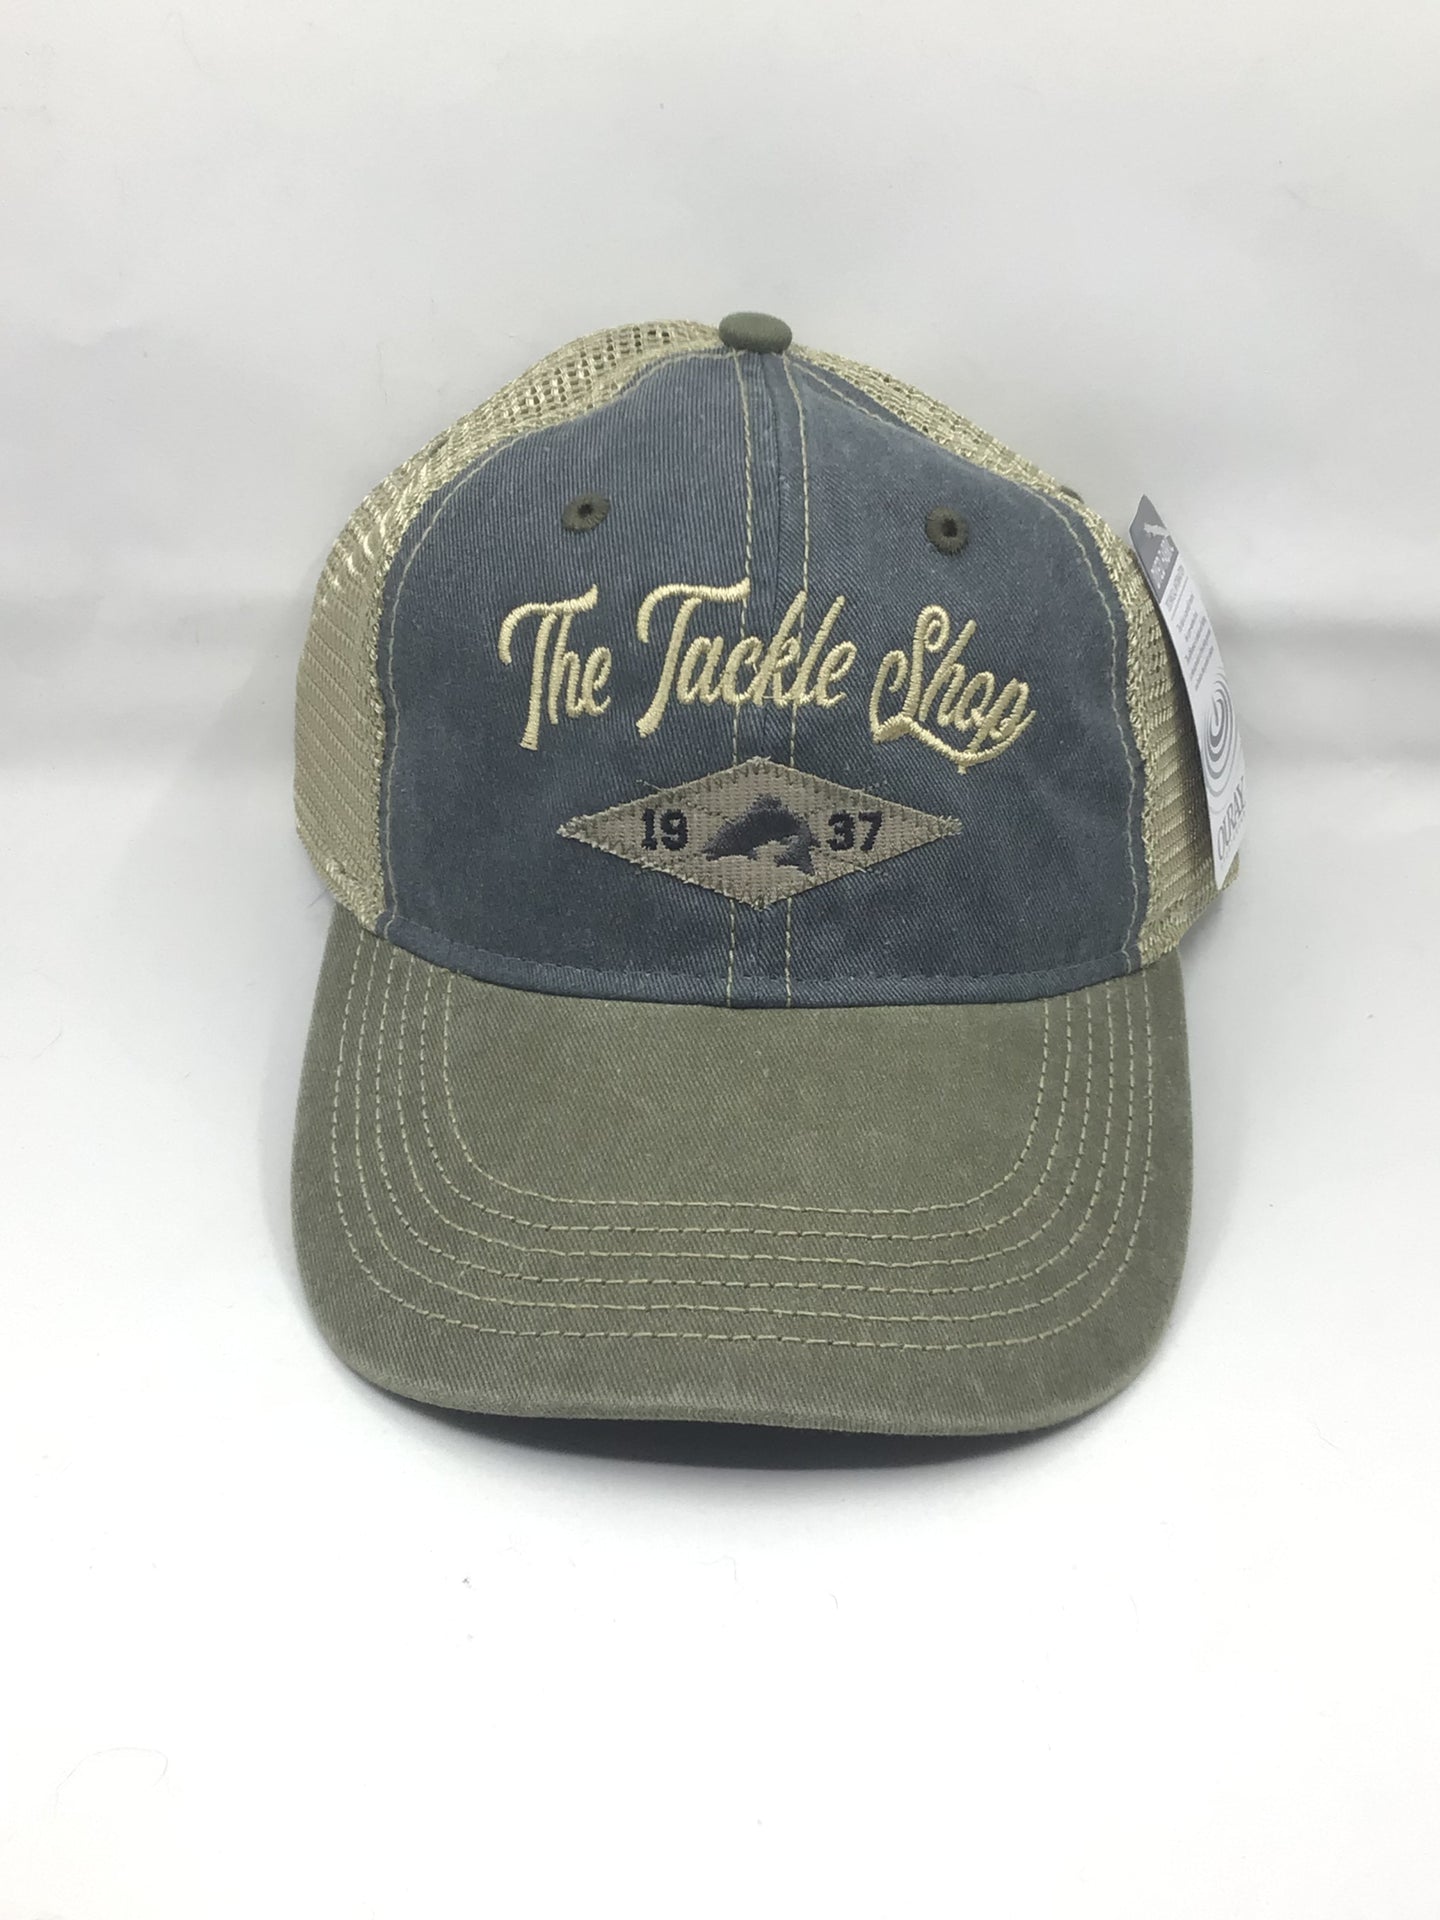 Ouray Tackle Shop Legend Vintage Wash Trucker Cap